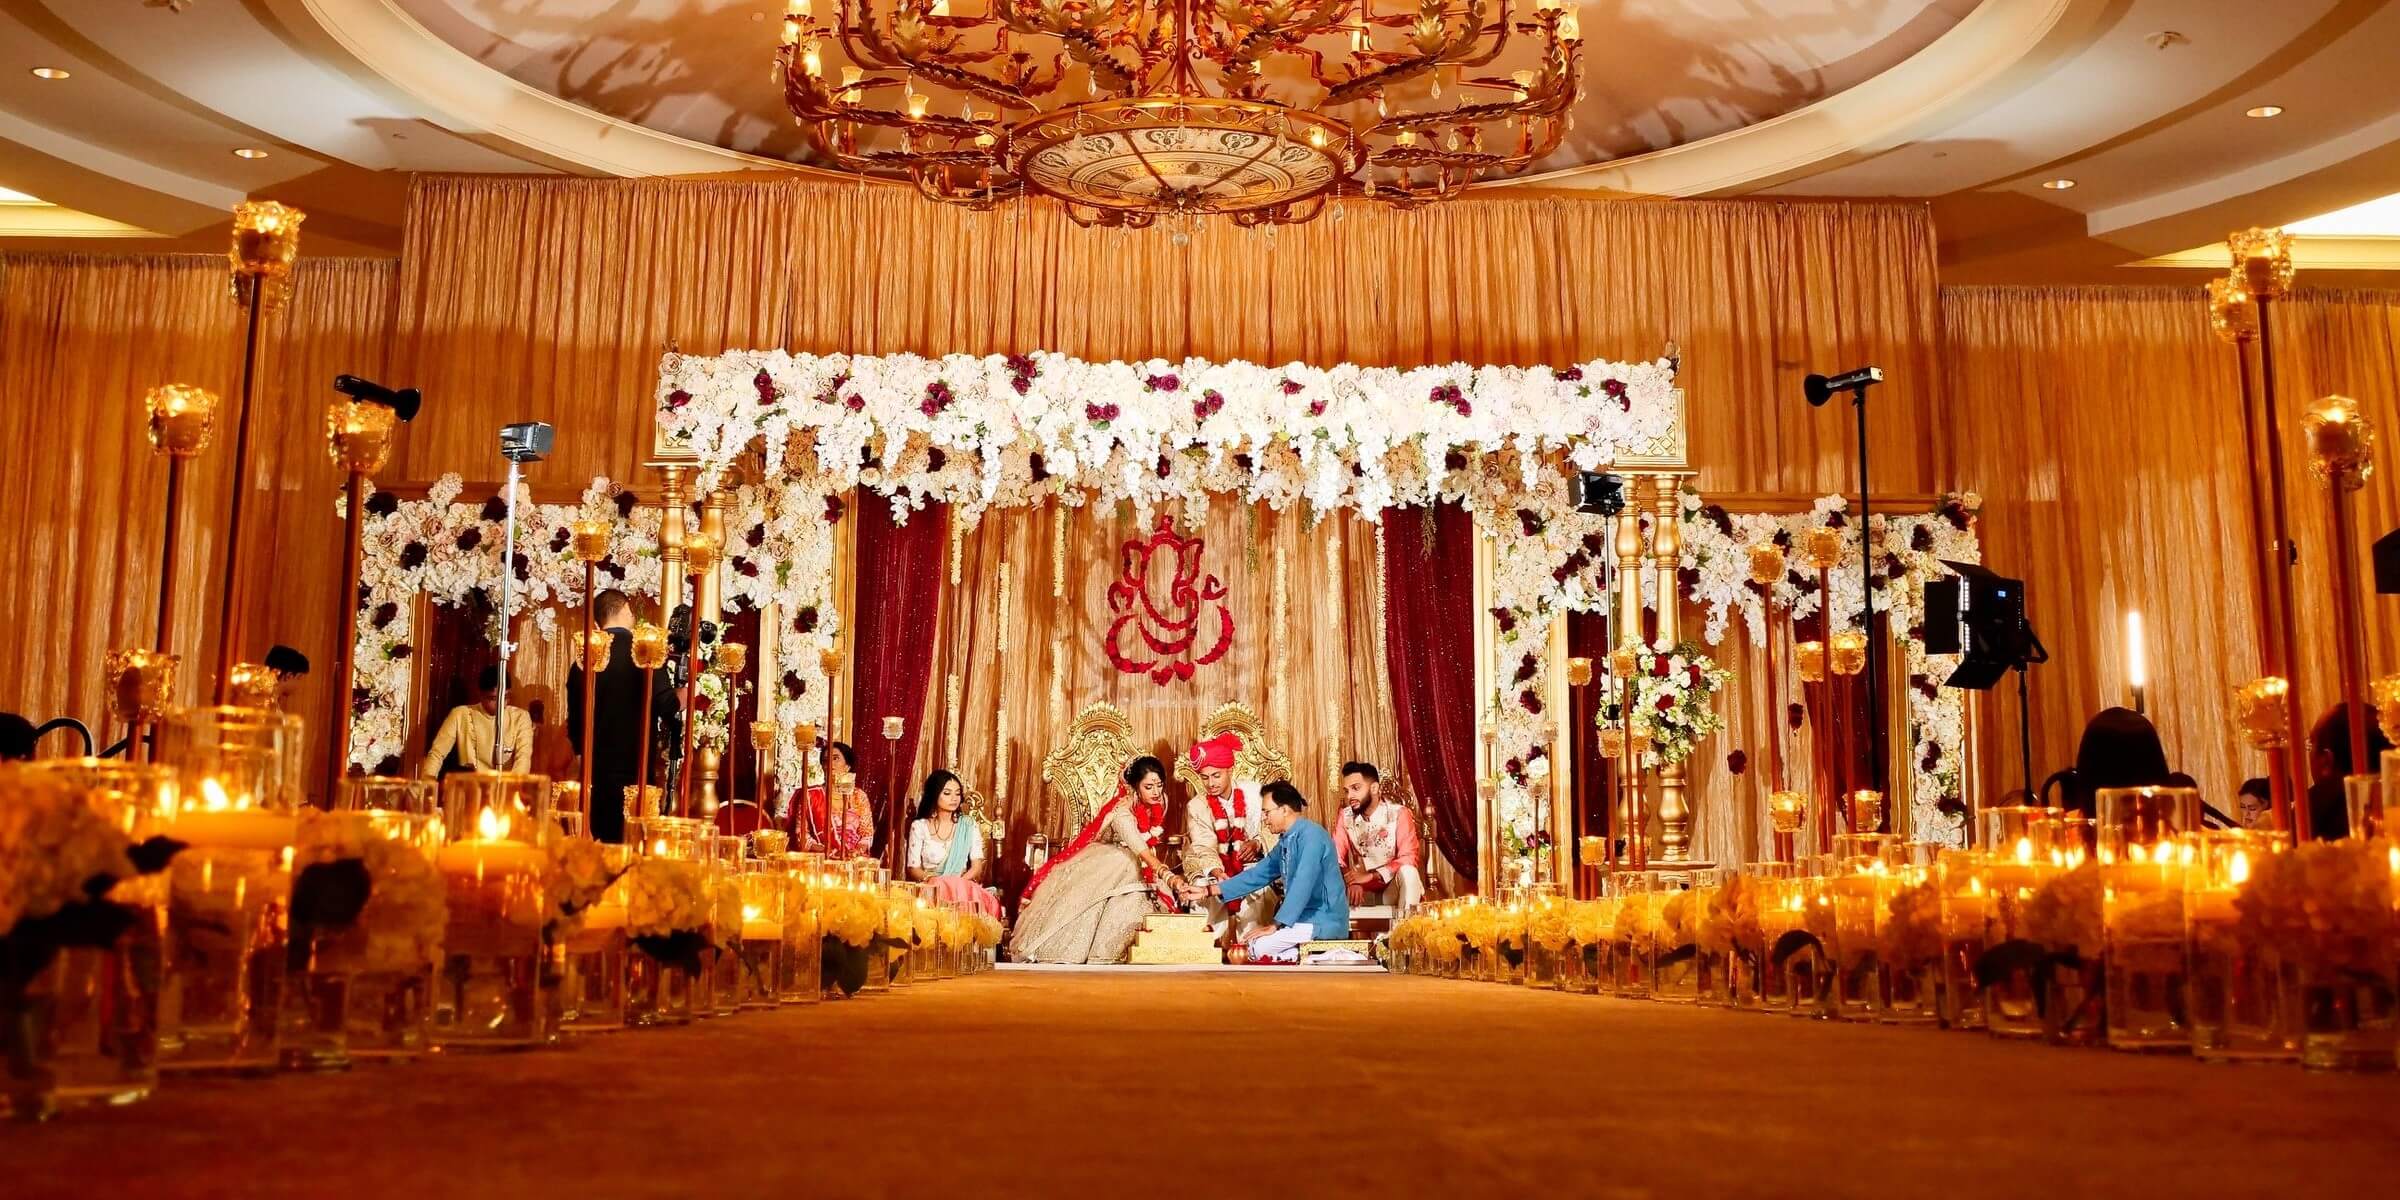 Wedding decorators Chennai tamilnadu